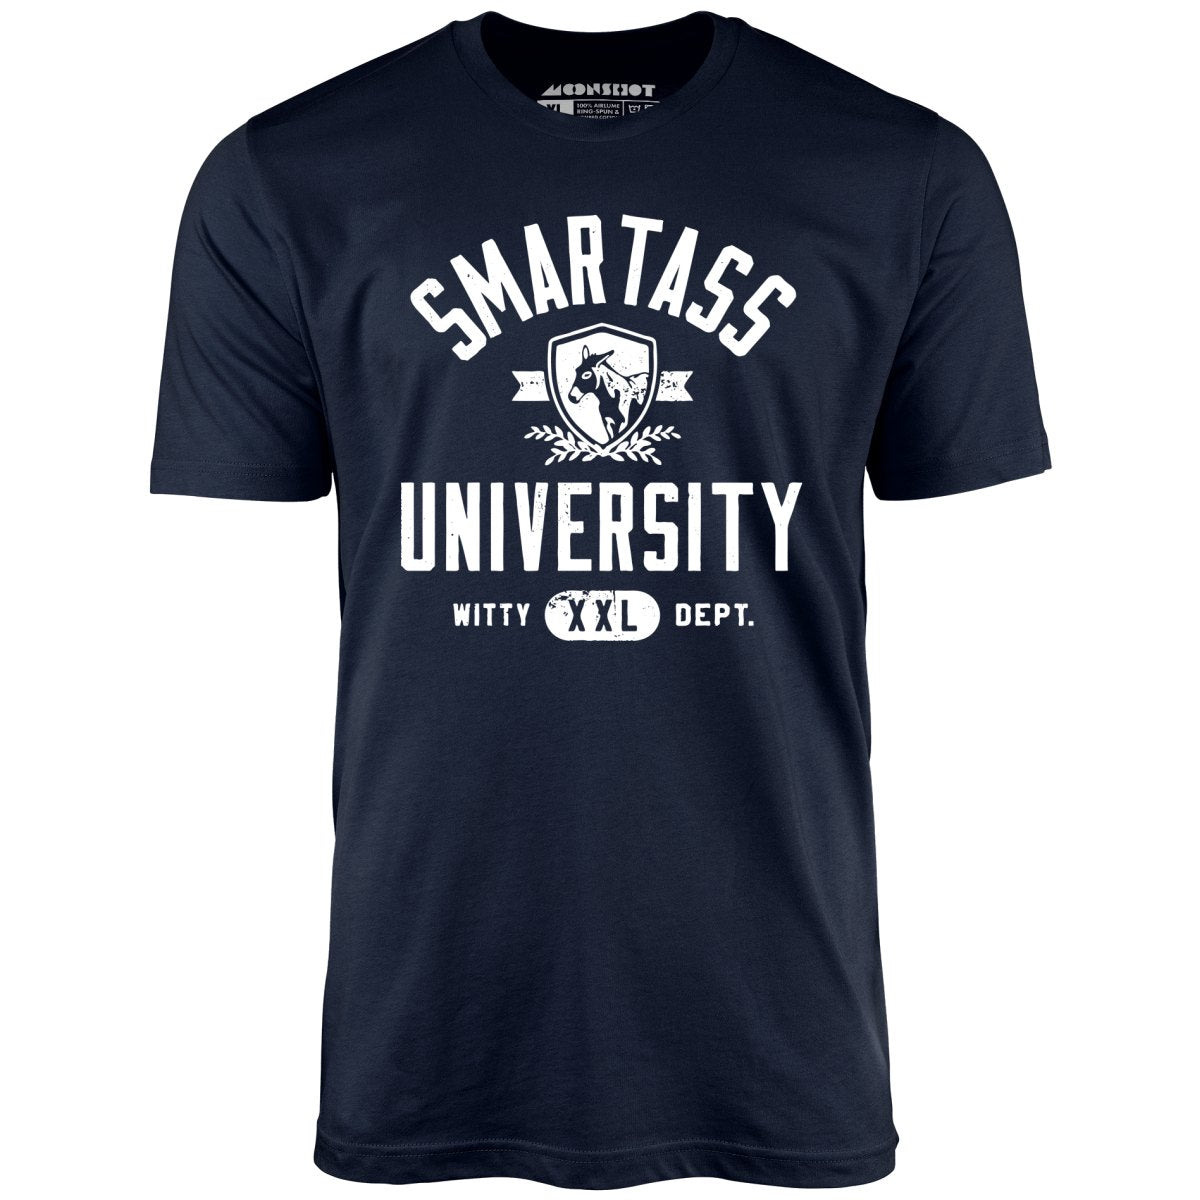 Smartass University - Unisex T-Shirt